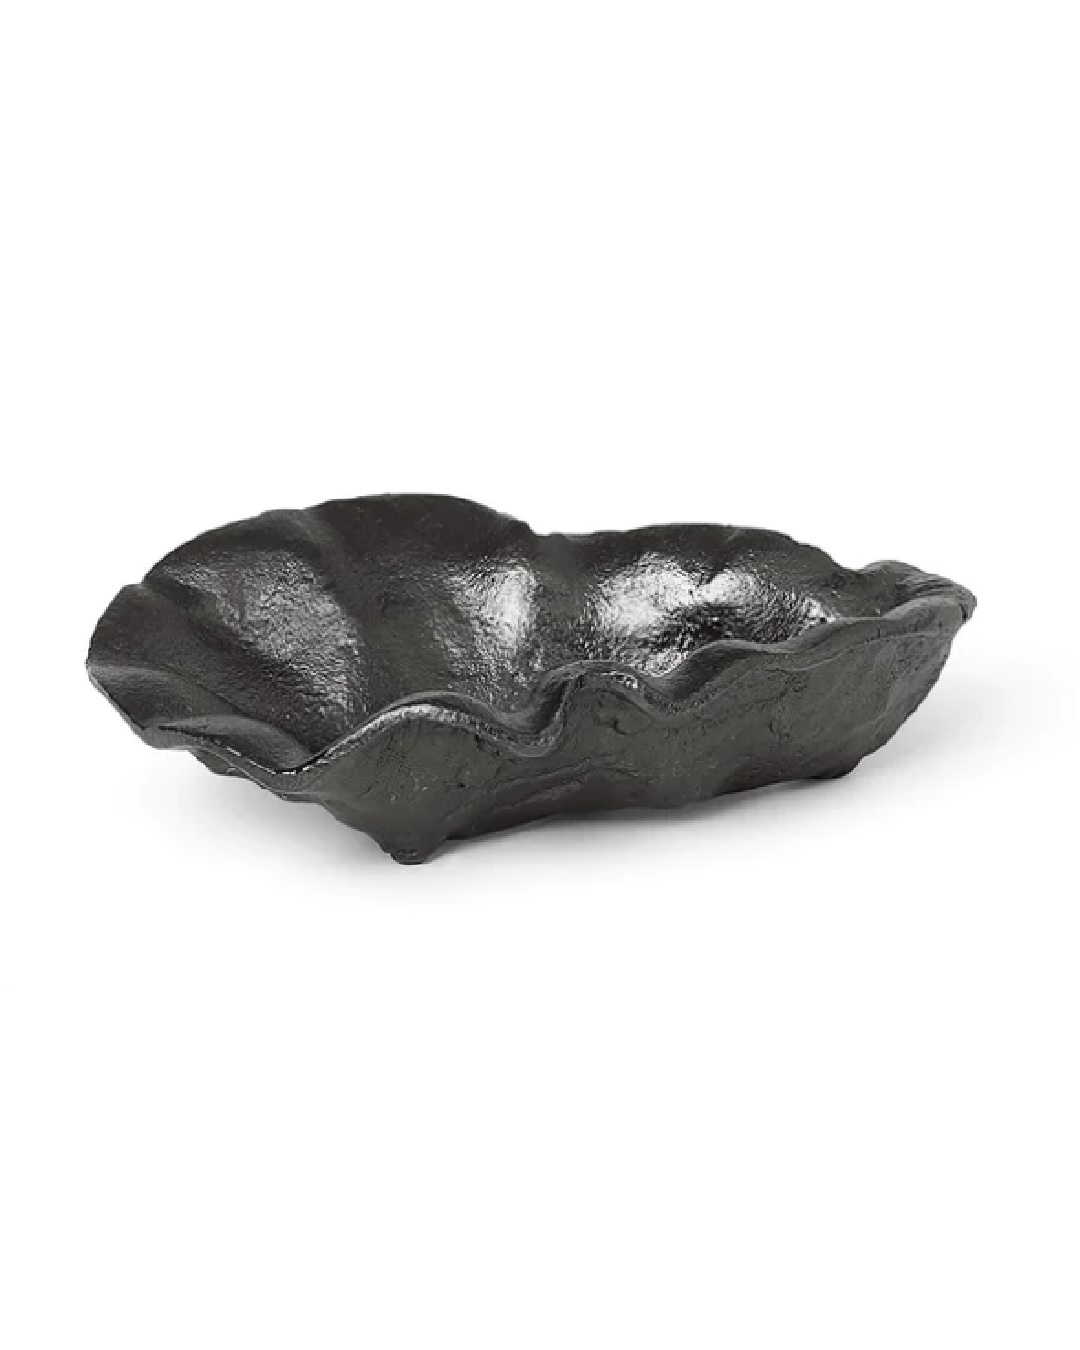 Oyster bowl black